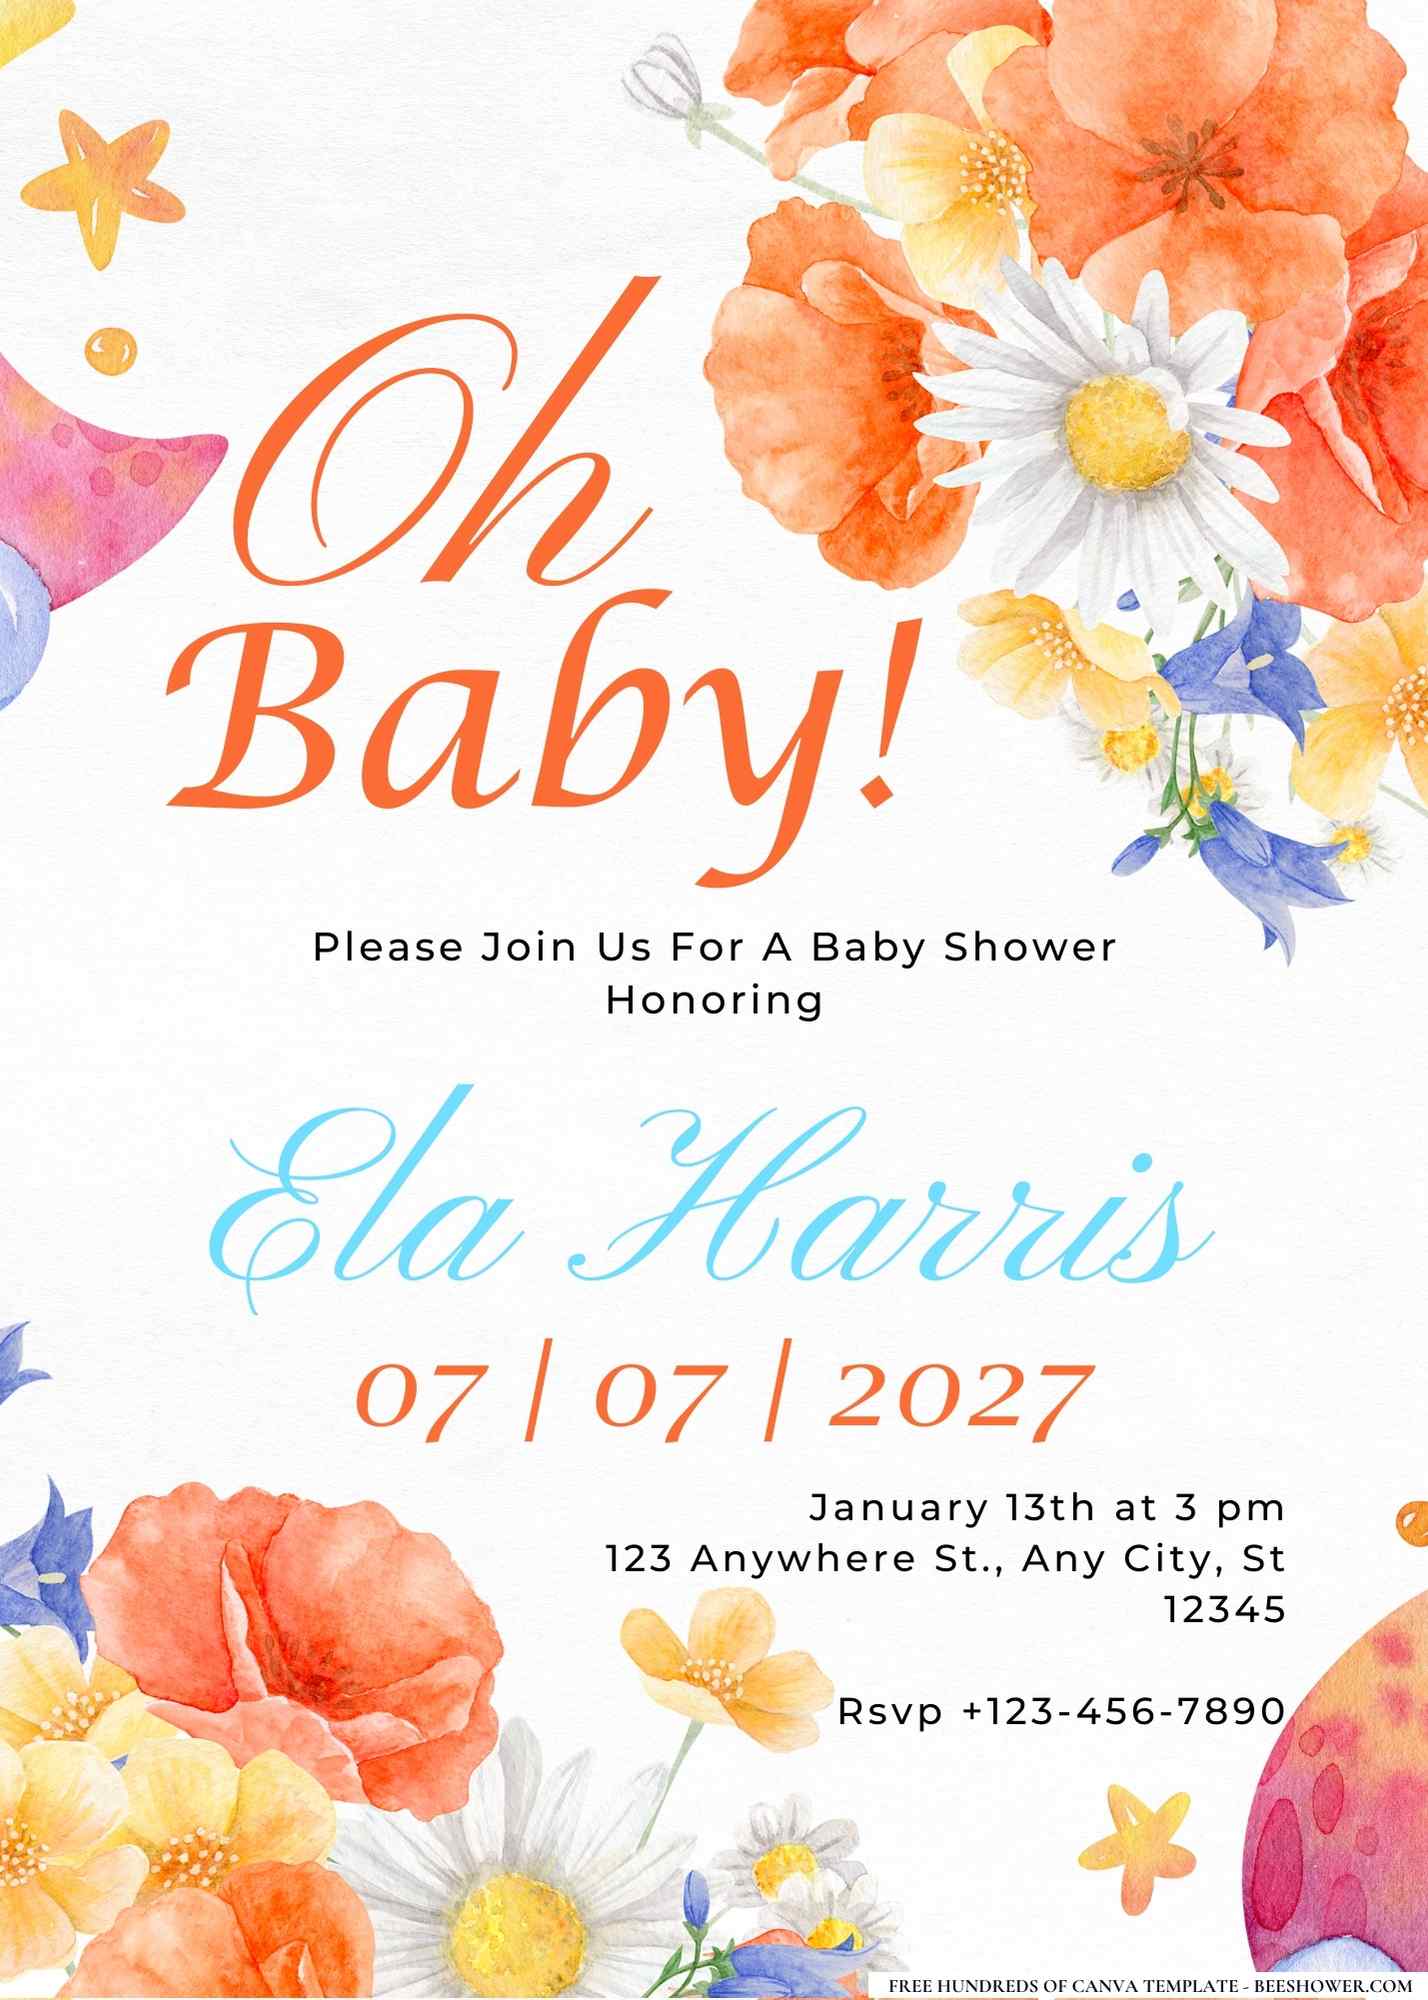 Daisy Dreams and Delights Baby Shower Invitation